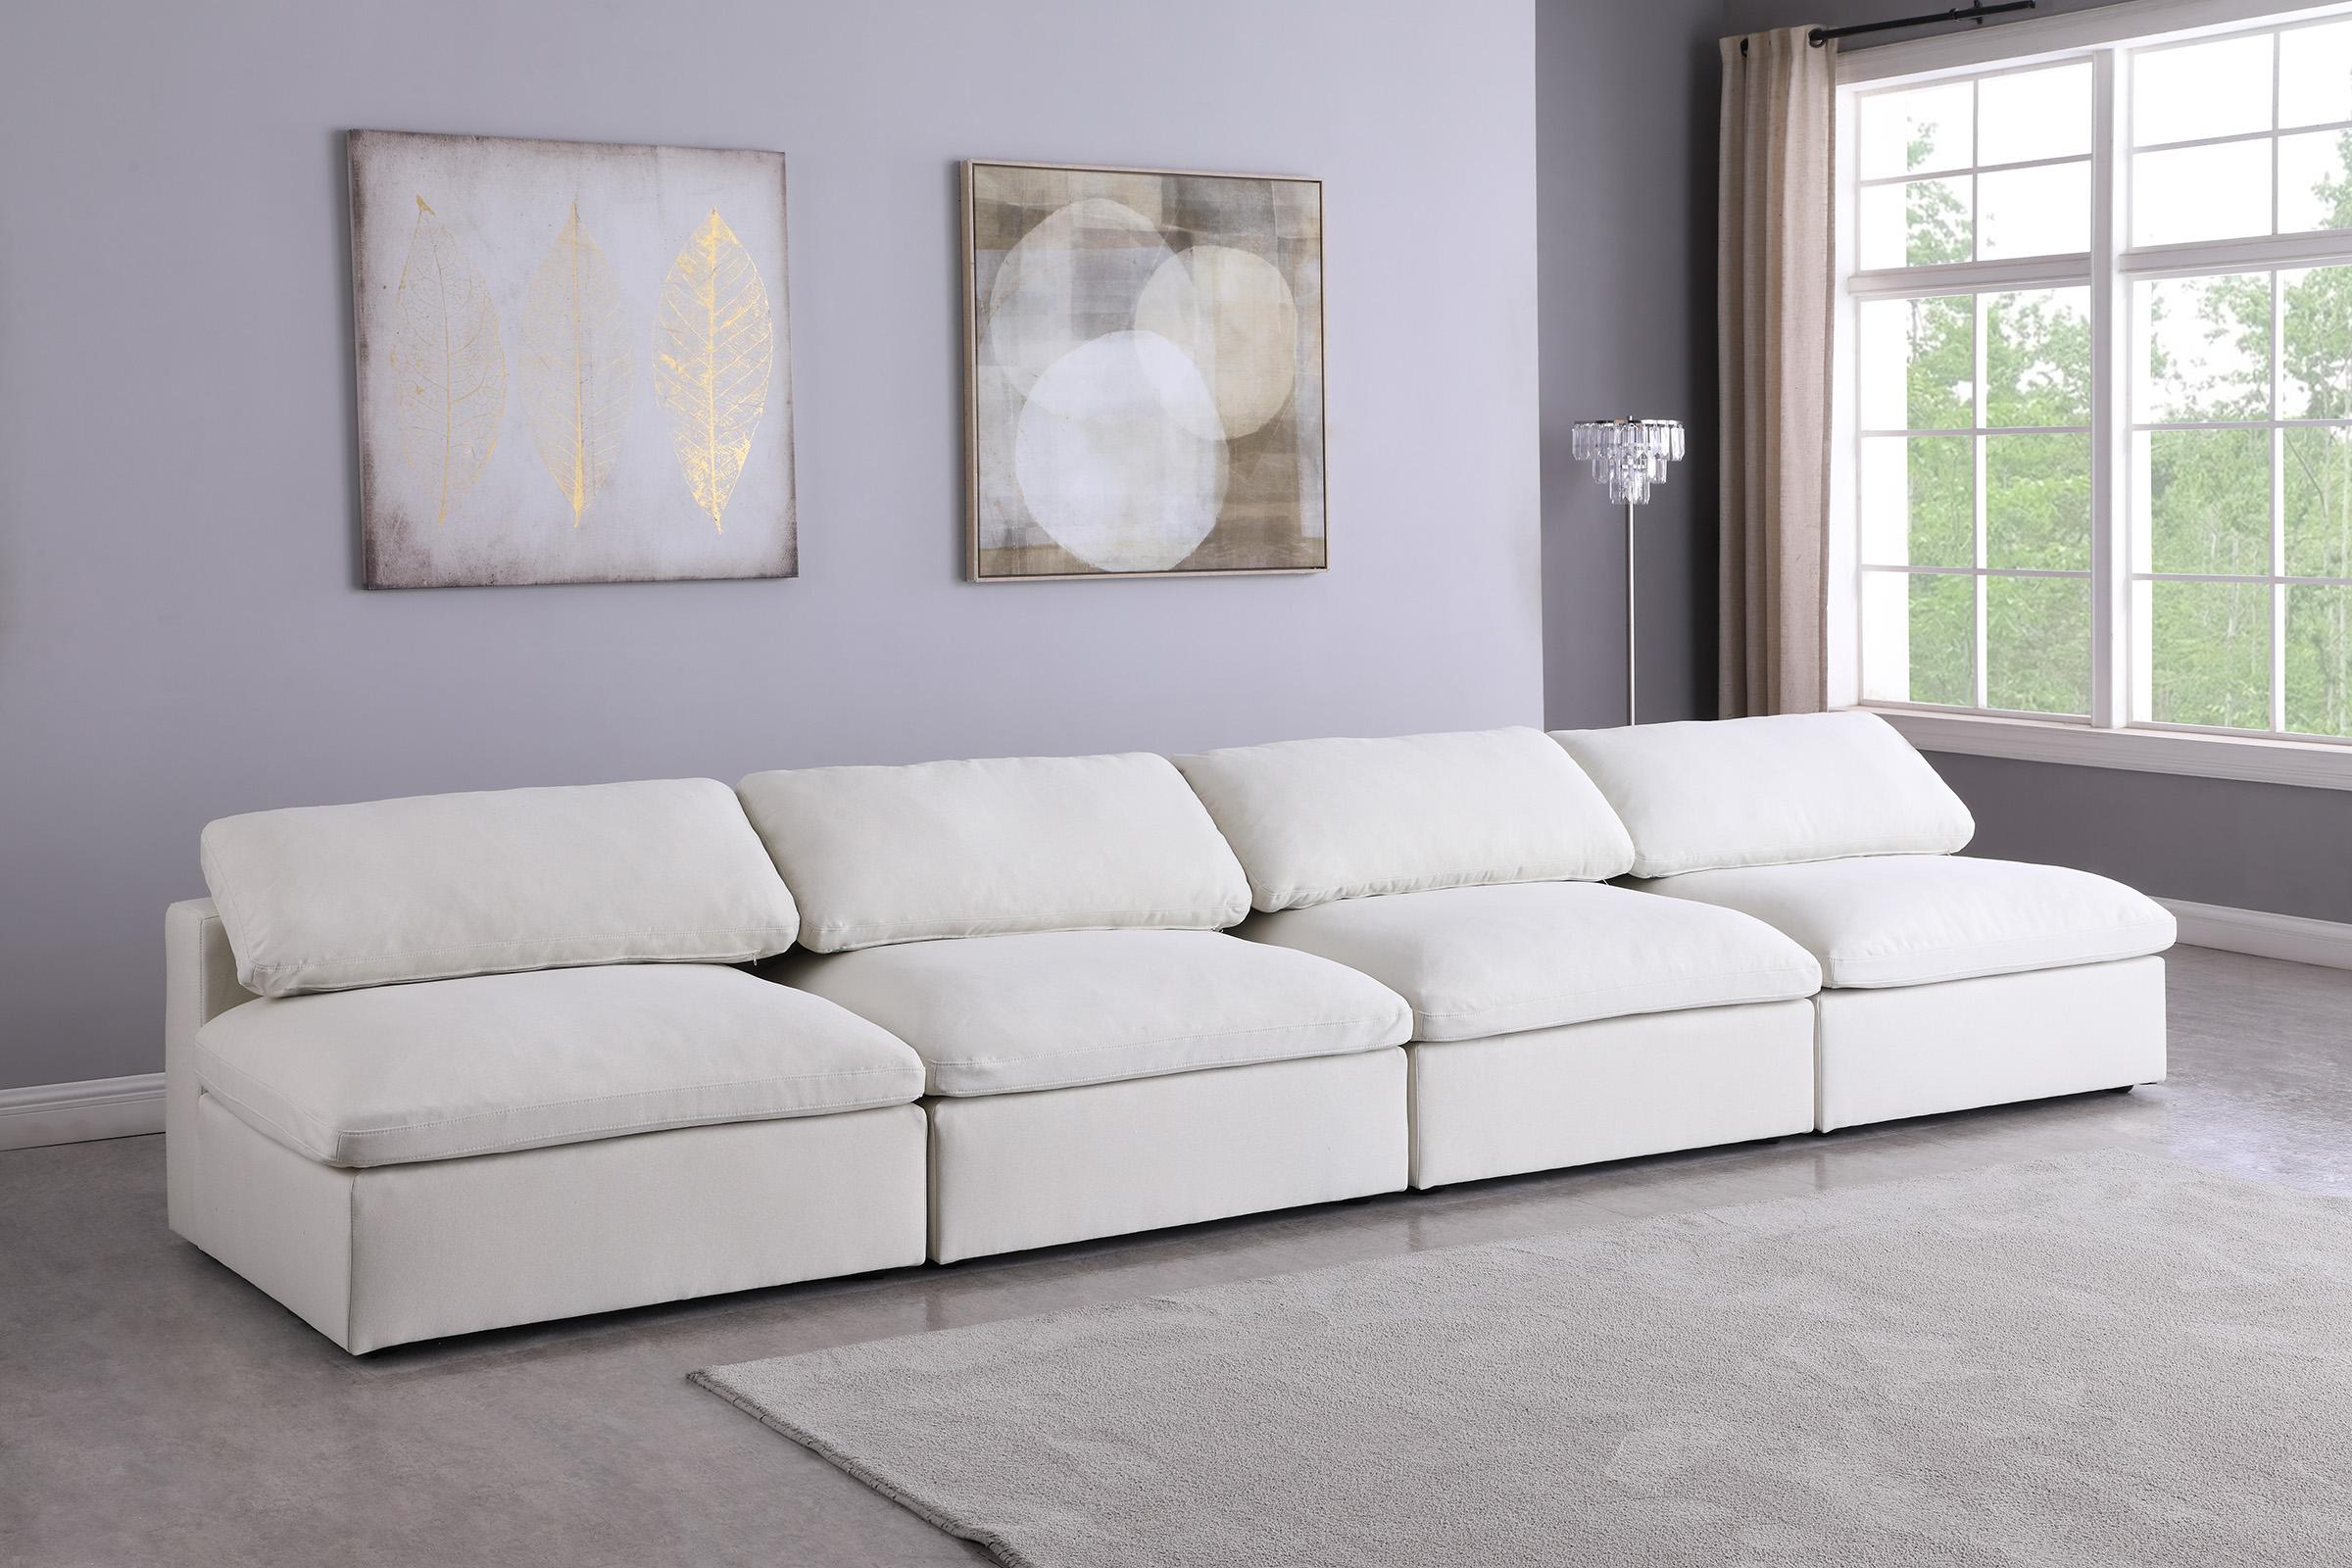 

    
Serene Cream Linen Textured Fabric Deluxe Comfort Modular Armless Sofa S156 Meridian
